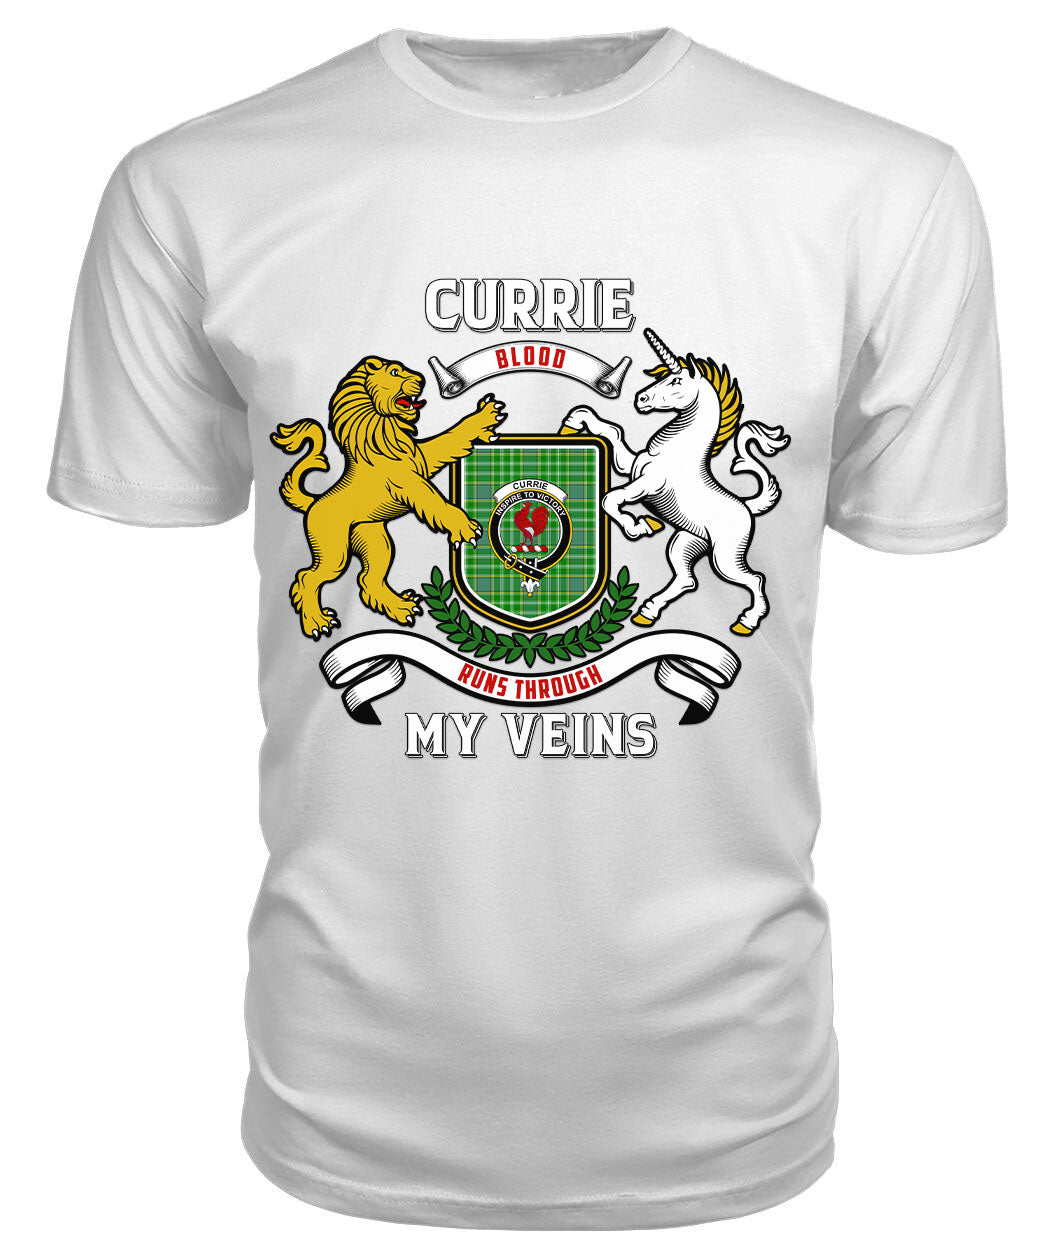 Currie or Curry Tartan Crest 2D T-shirt - Blood Runs Through My Veins Style